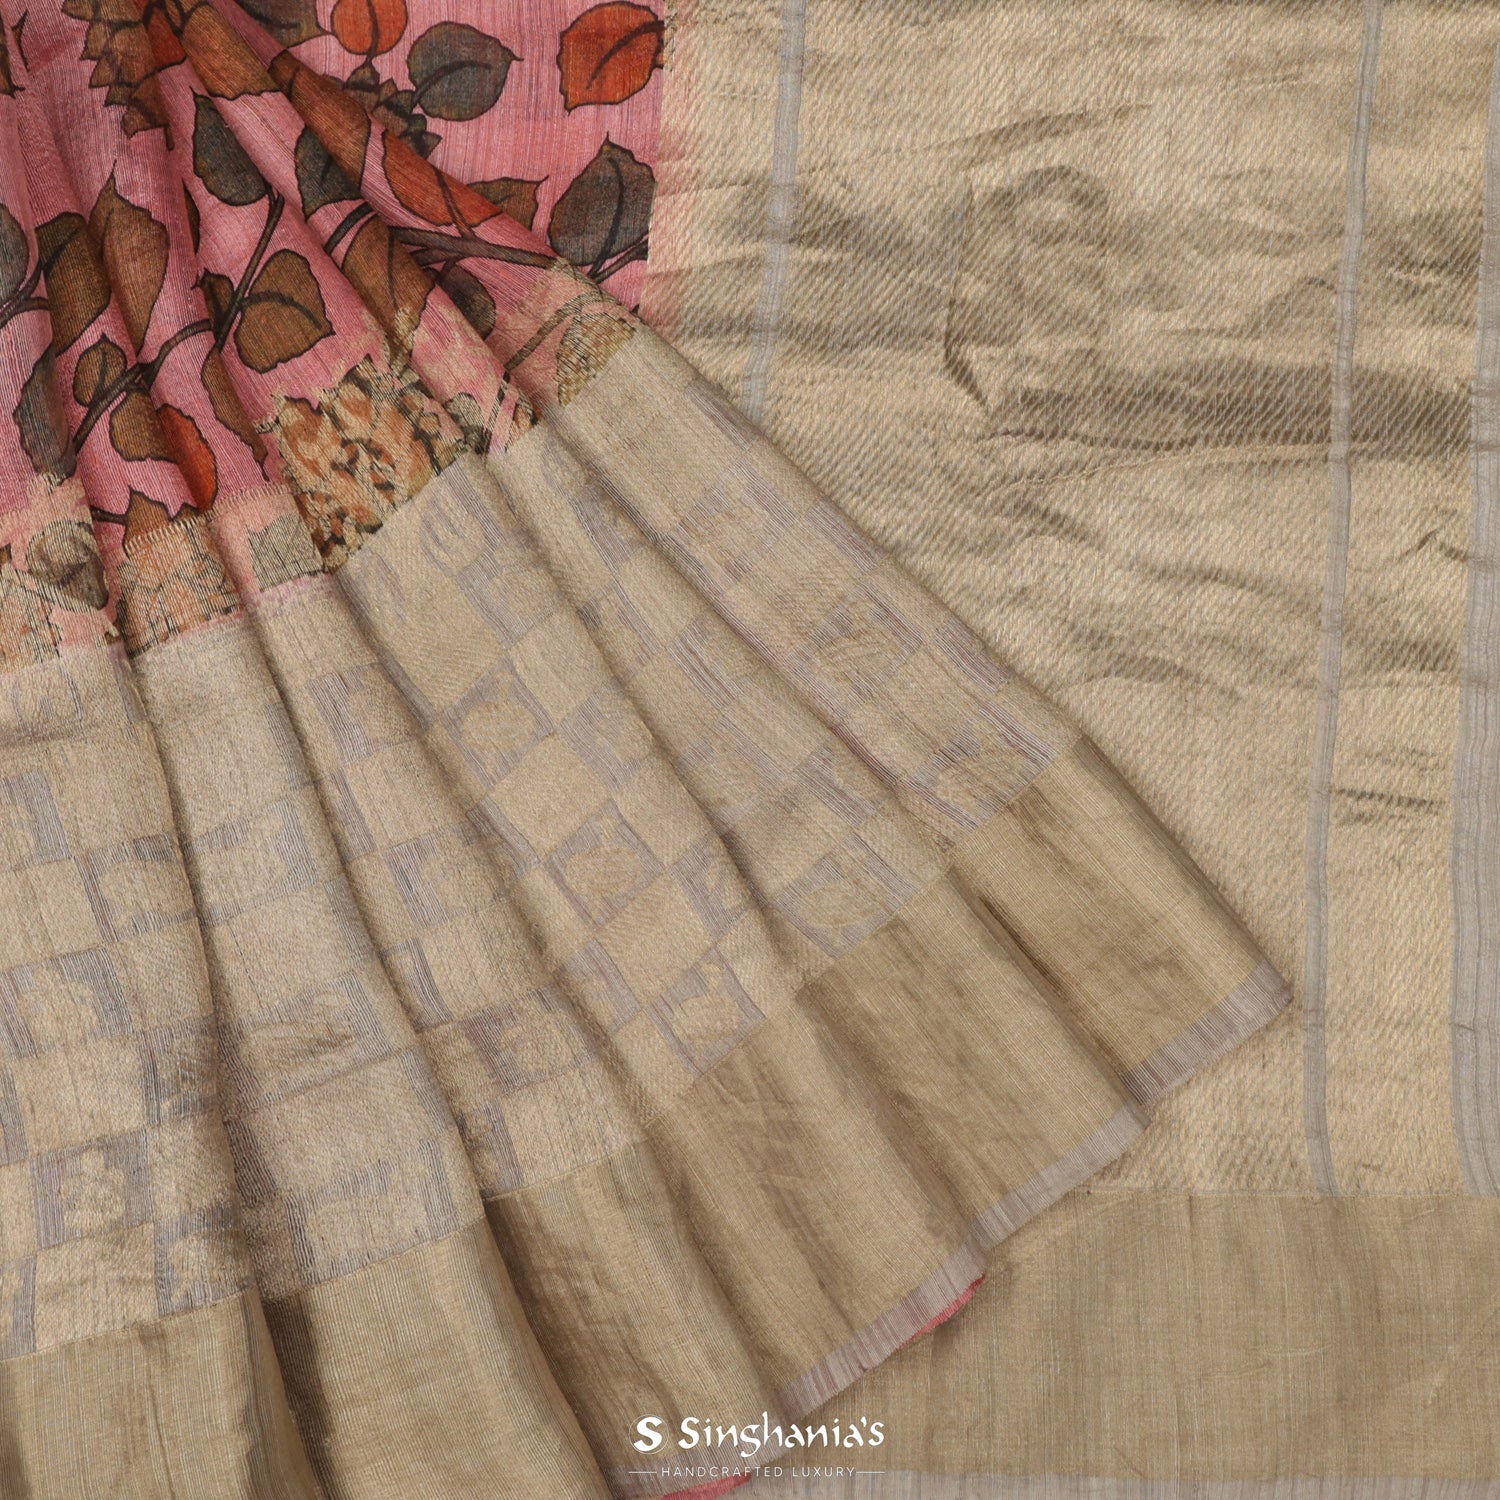 Light Pink Matka Silk Saree With Printed Floral Pattern Has Big Border